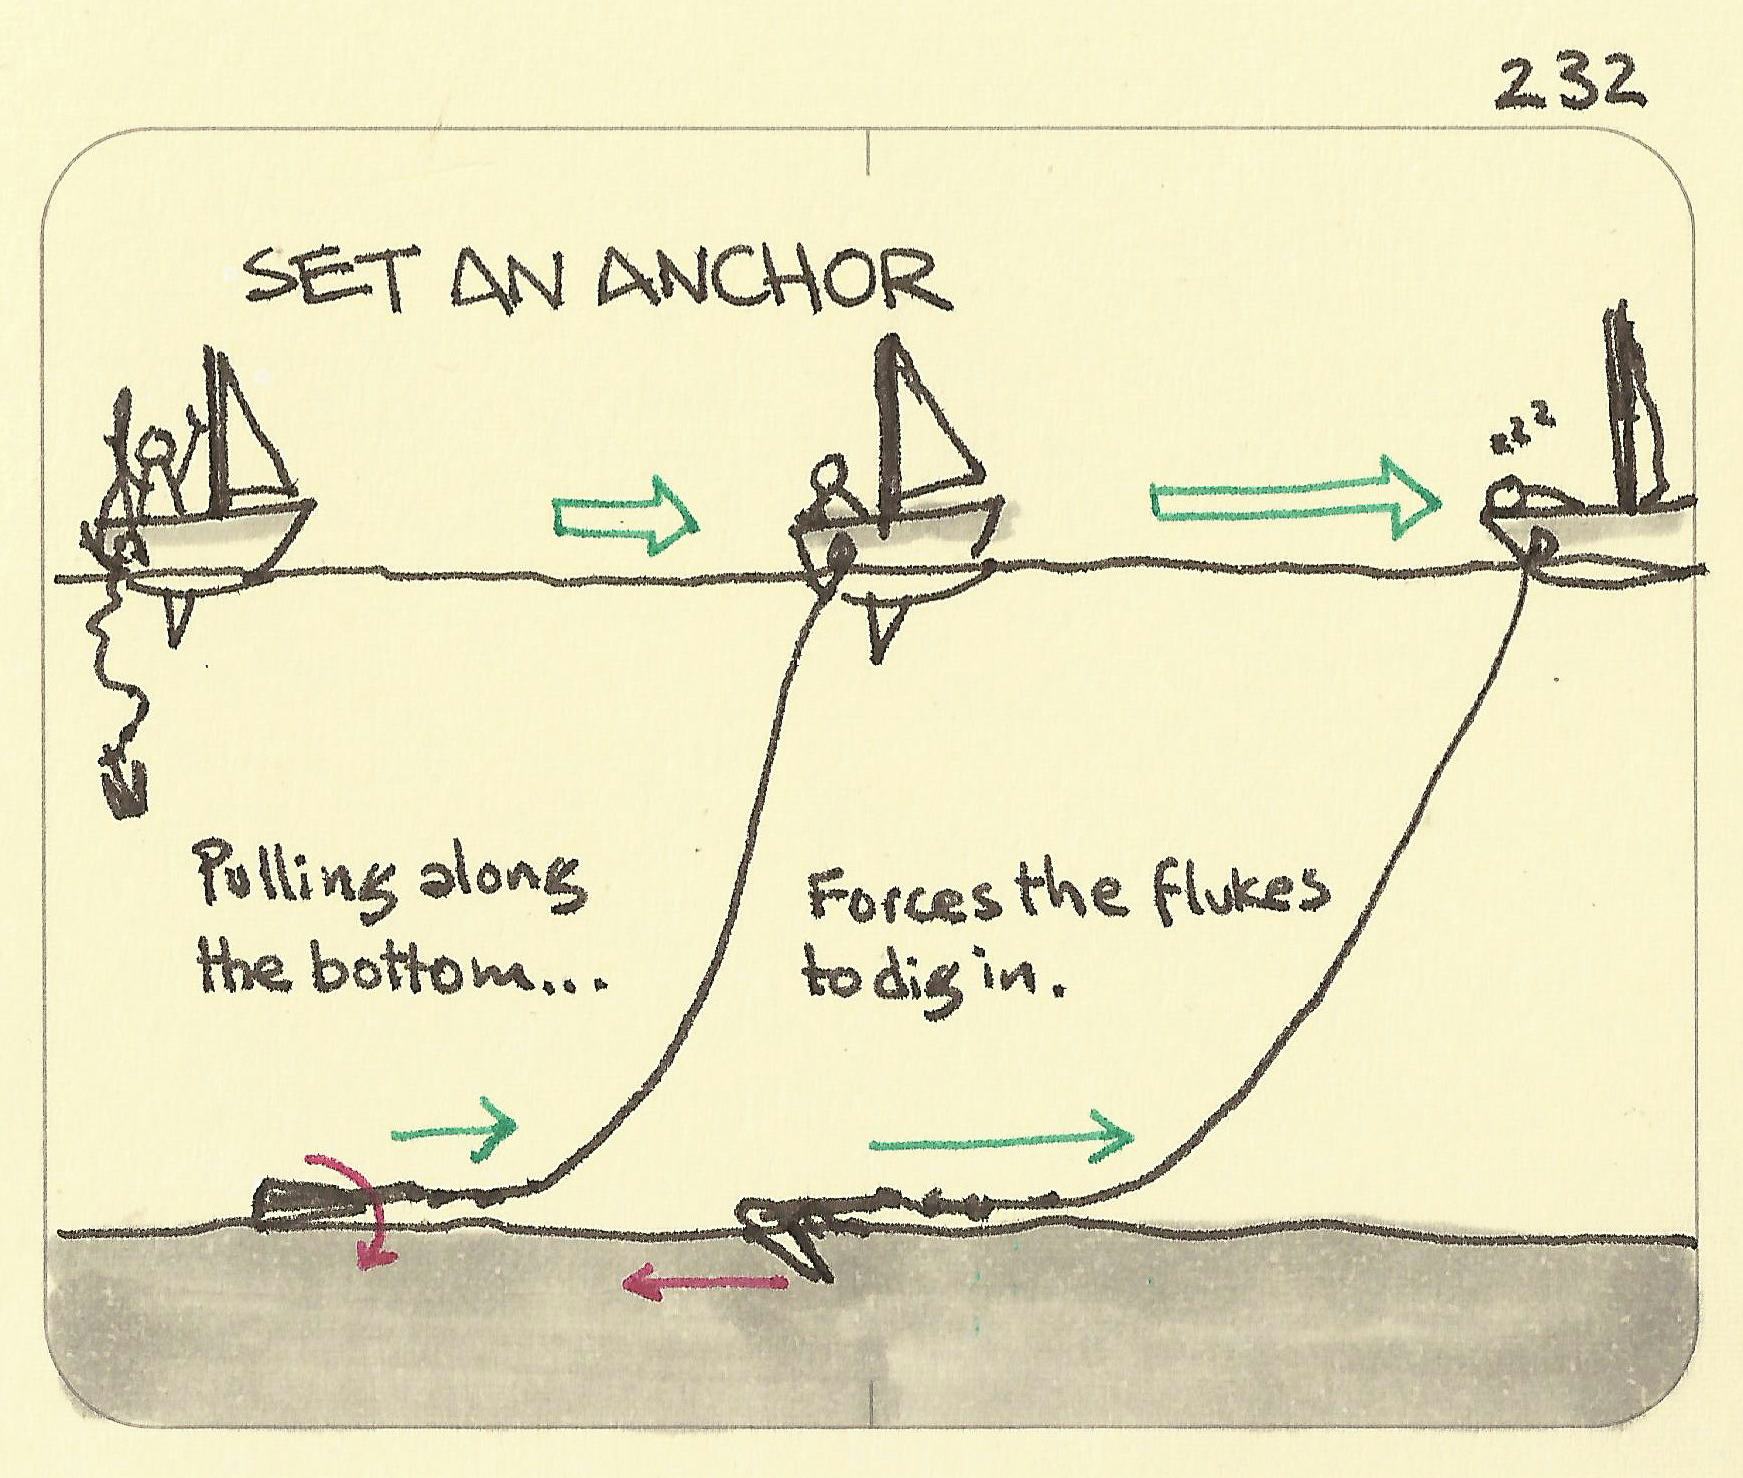 Set an anchor - Sketchplanations